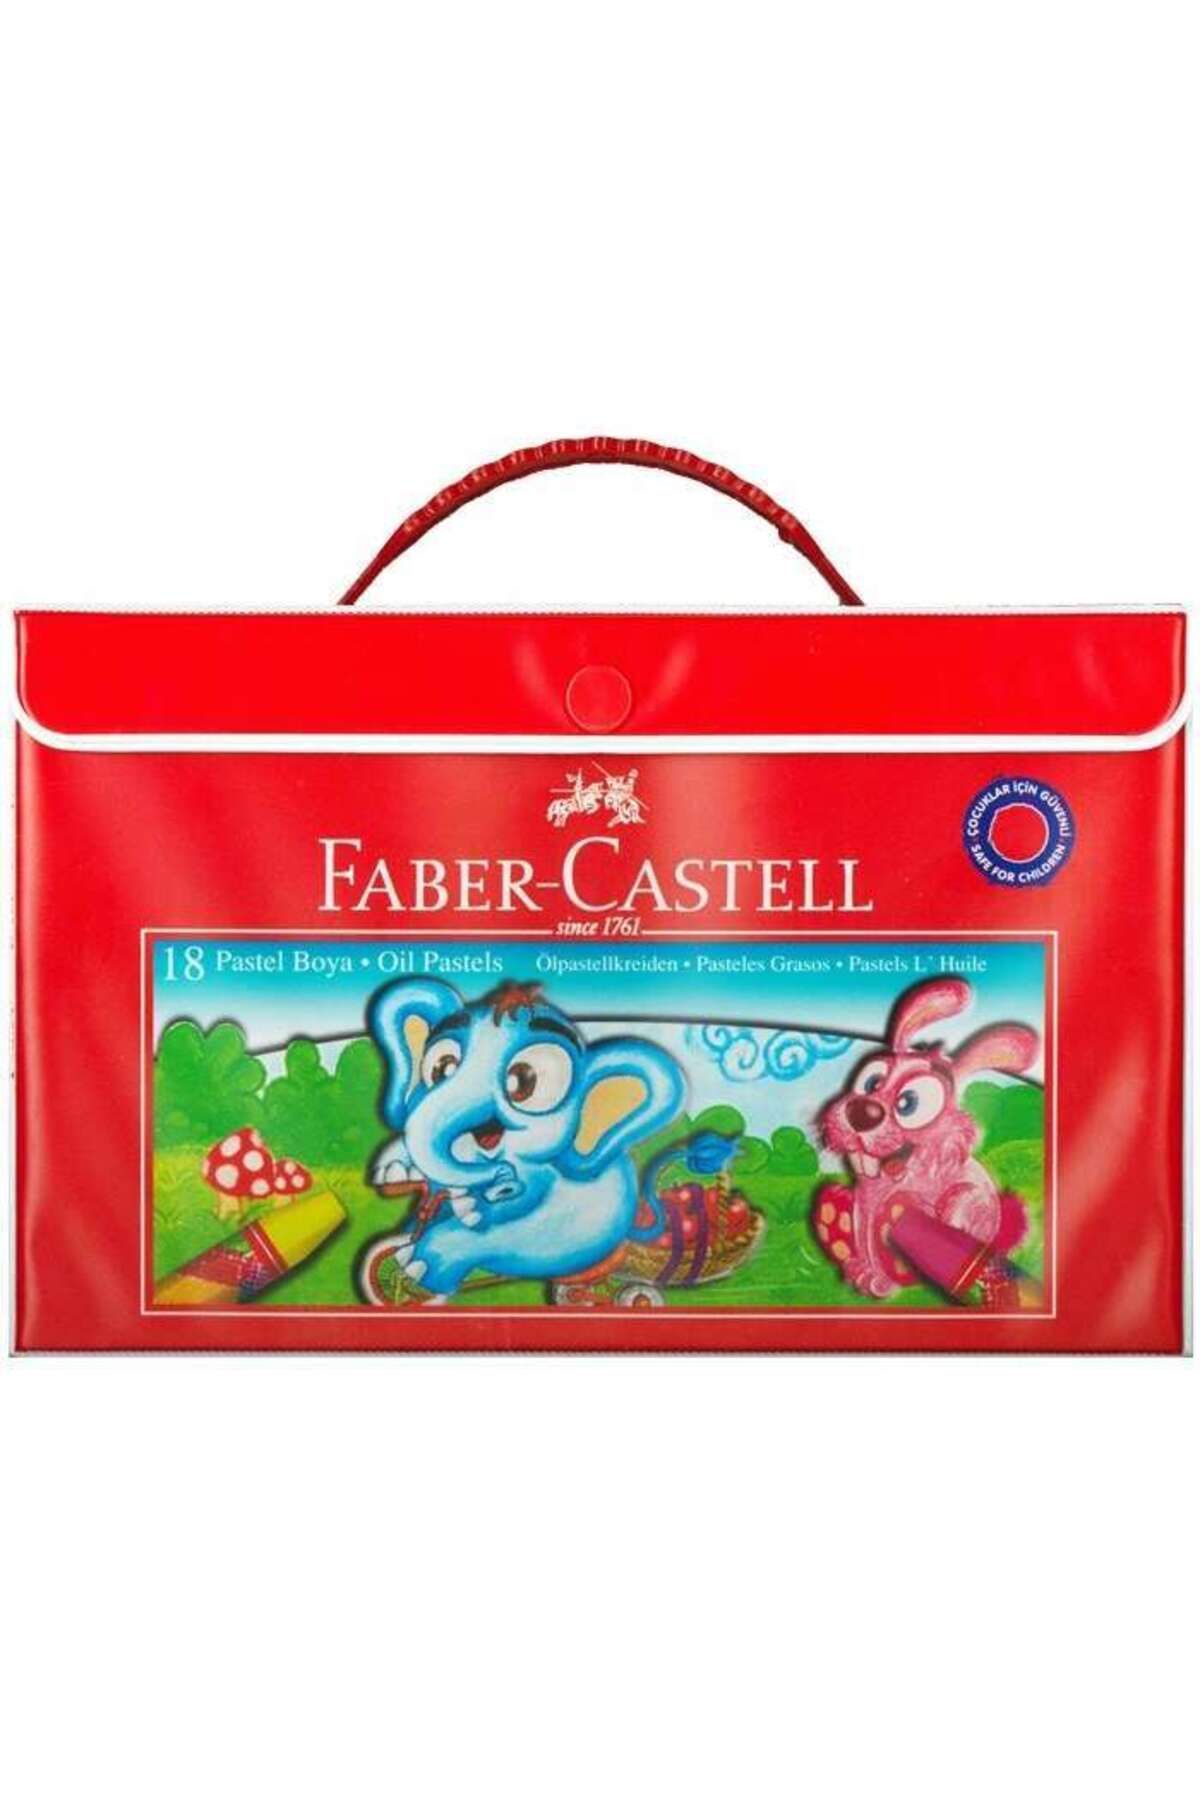 Faber Castell Pastel Boya Seti Redline 18 Renk